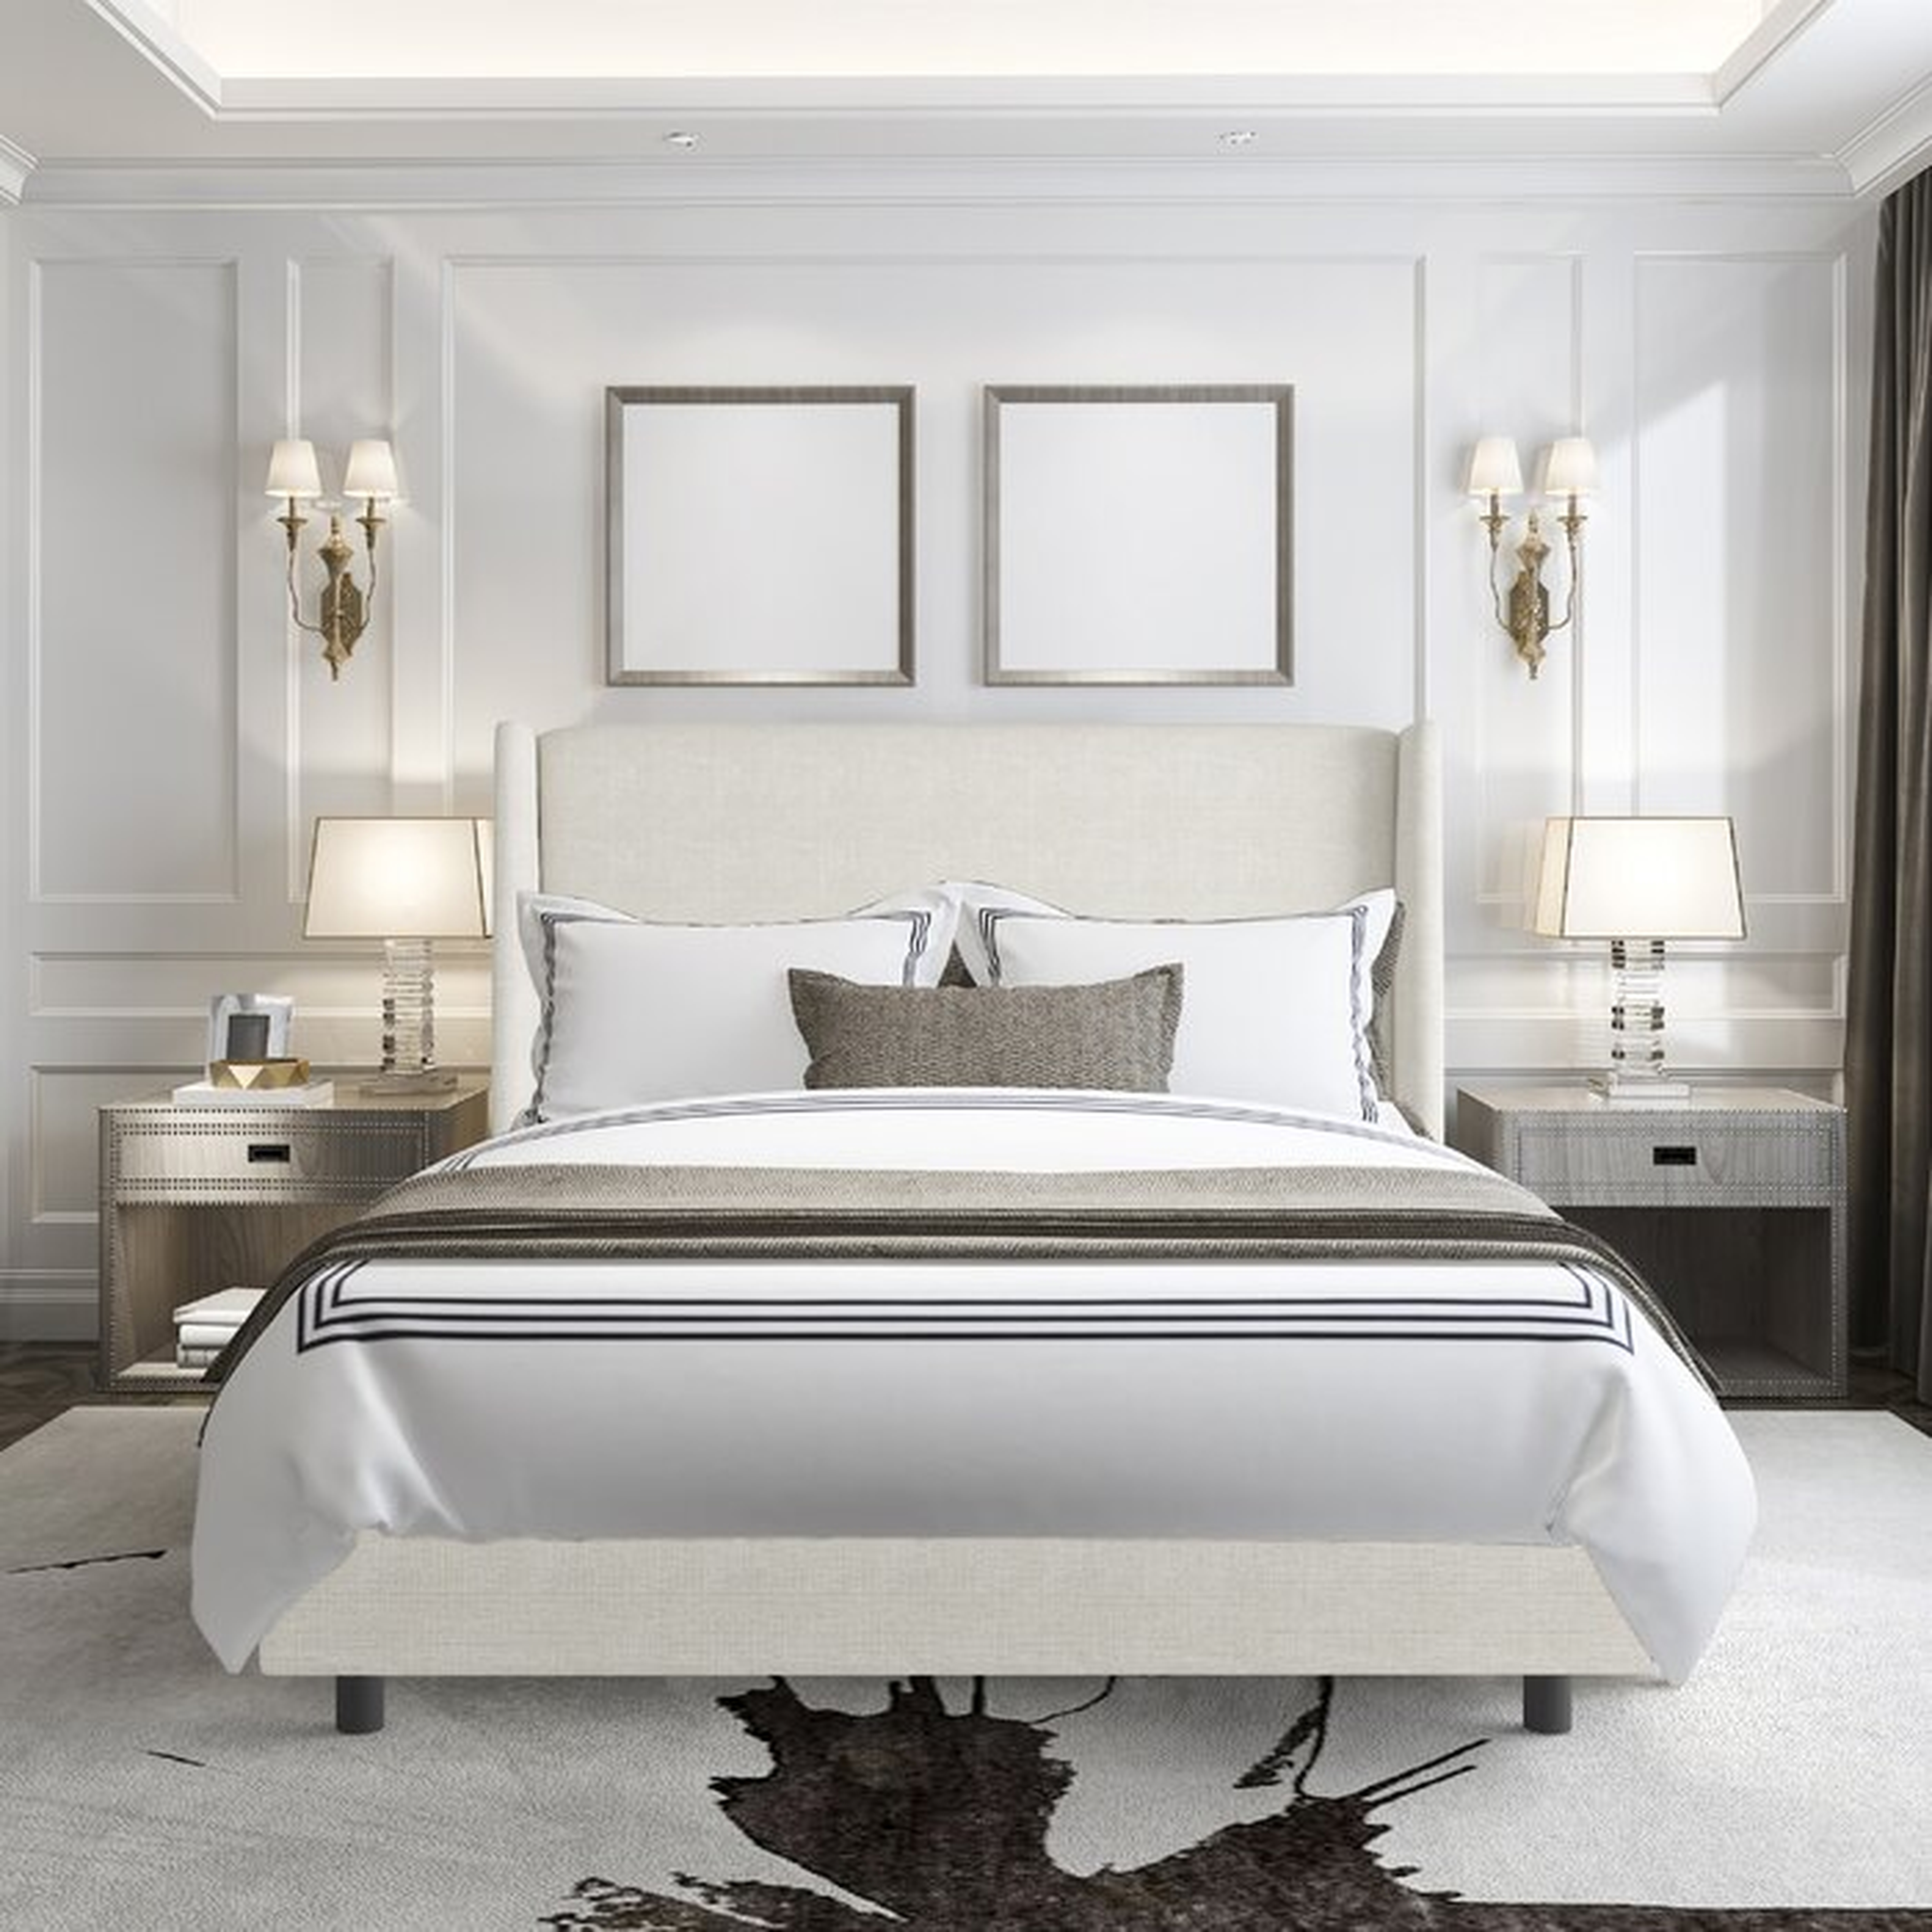 Alrai Upholstered Low Profile Standard Bed- King size - Zuma white - Wayfair